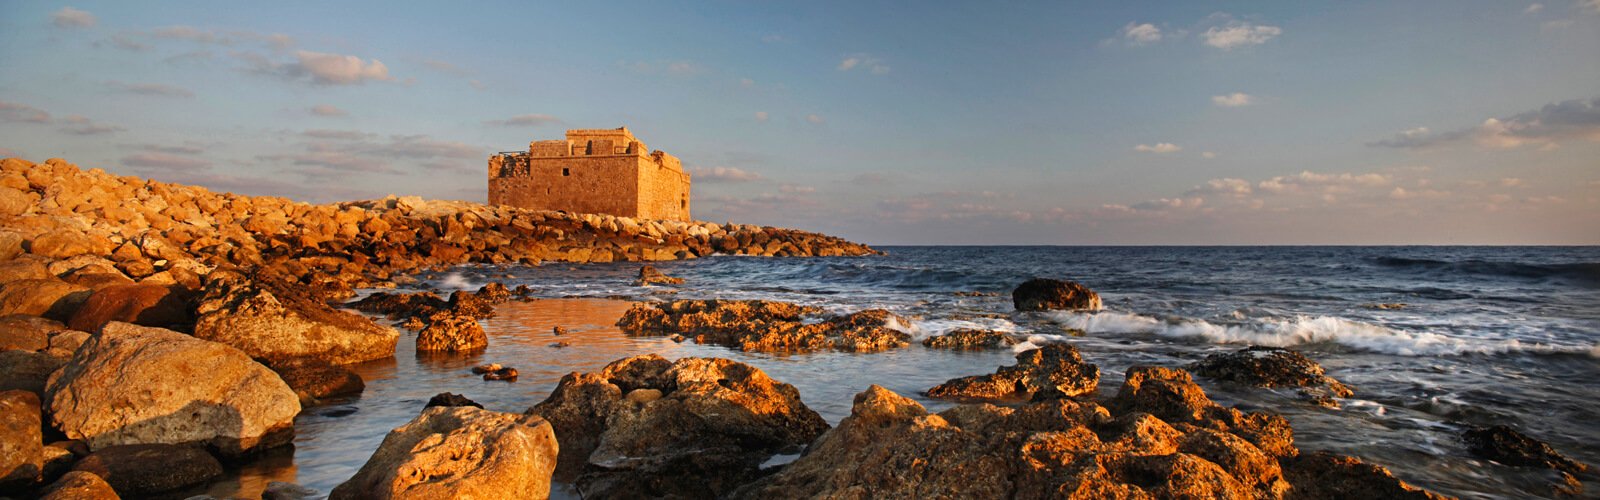 Остров кипр википедия с фото